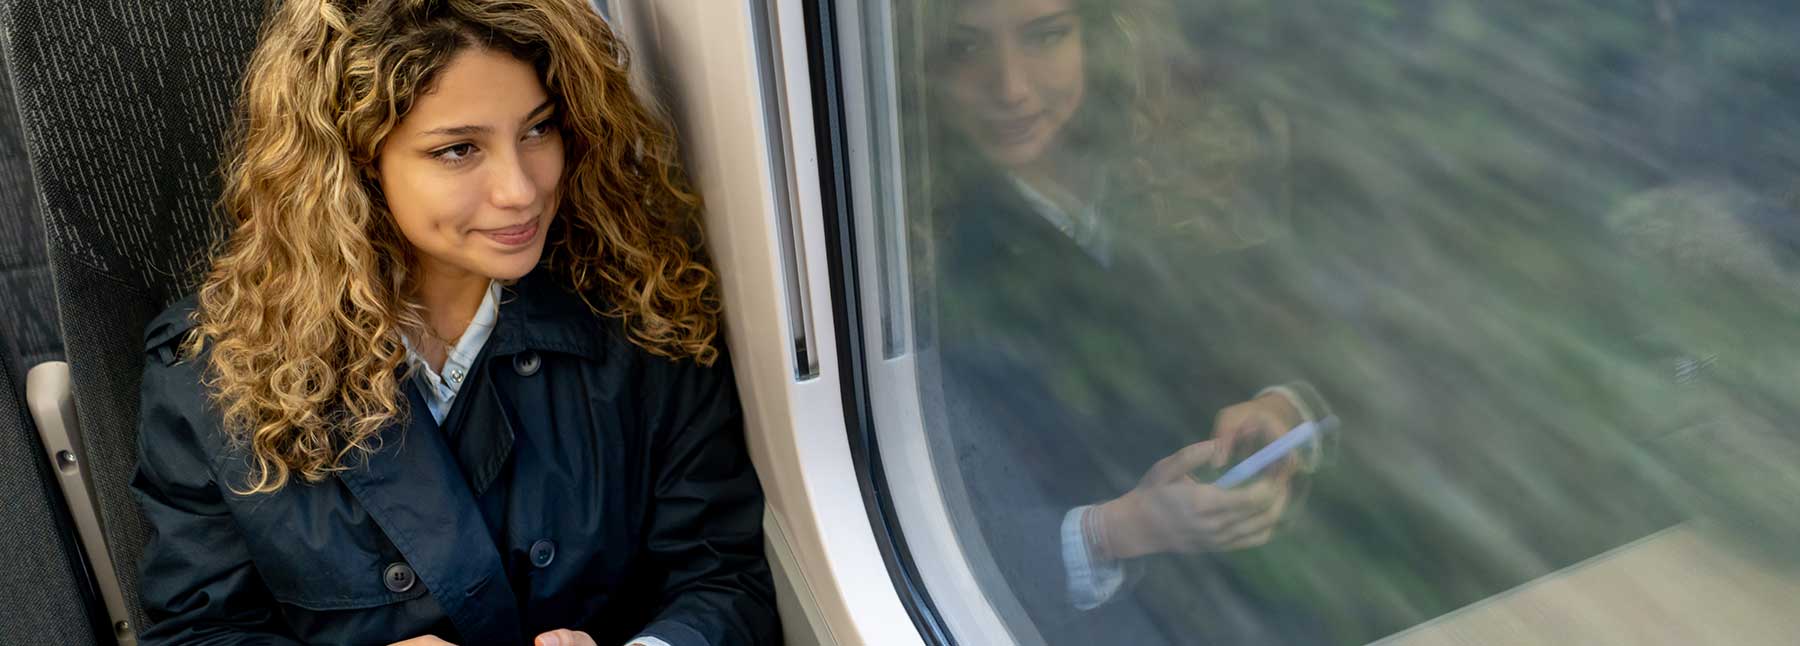 woman on train